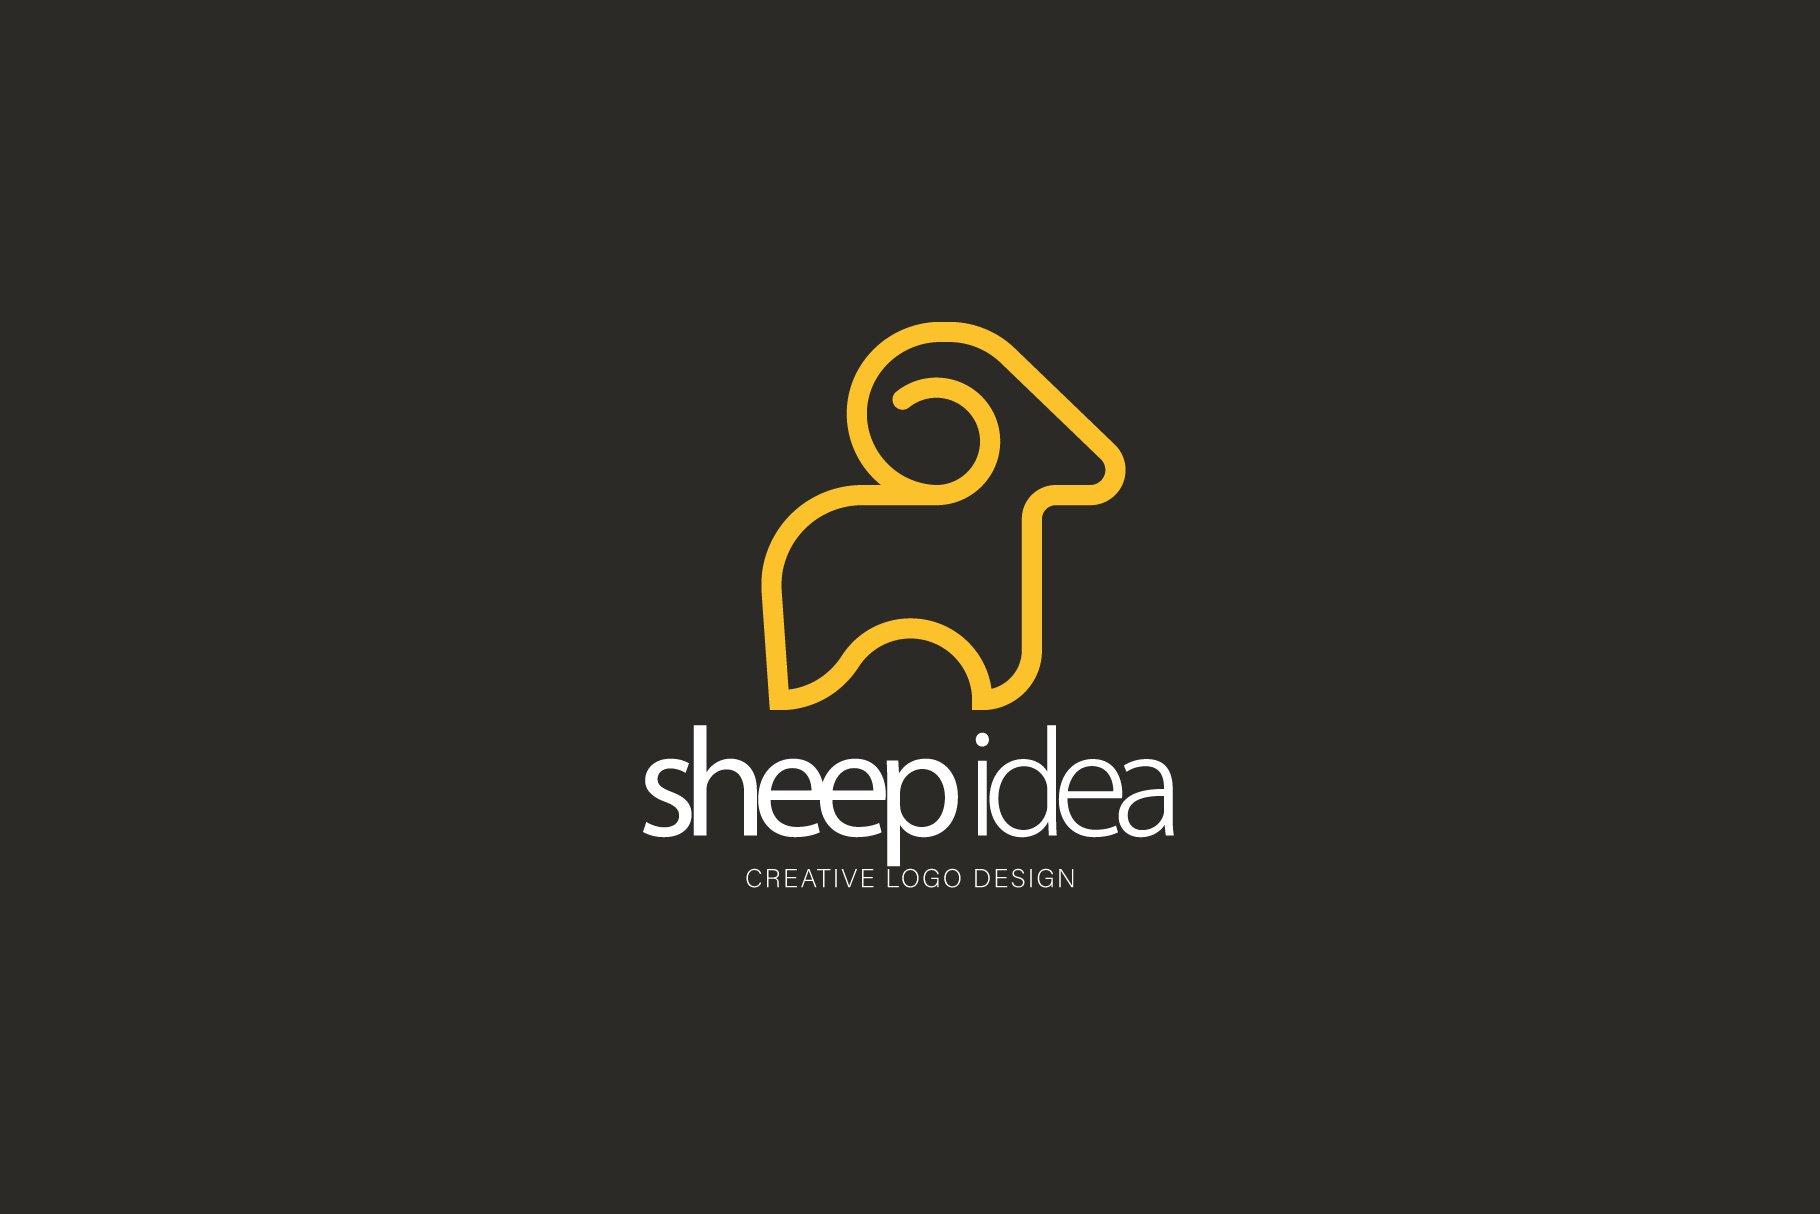 sheep logo cover image.